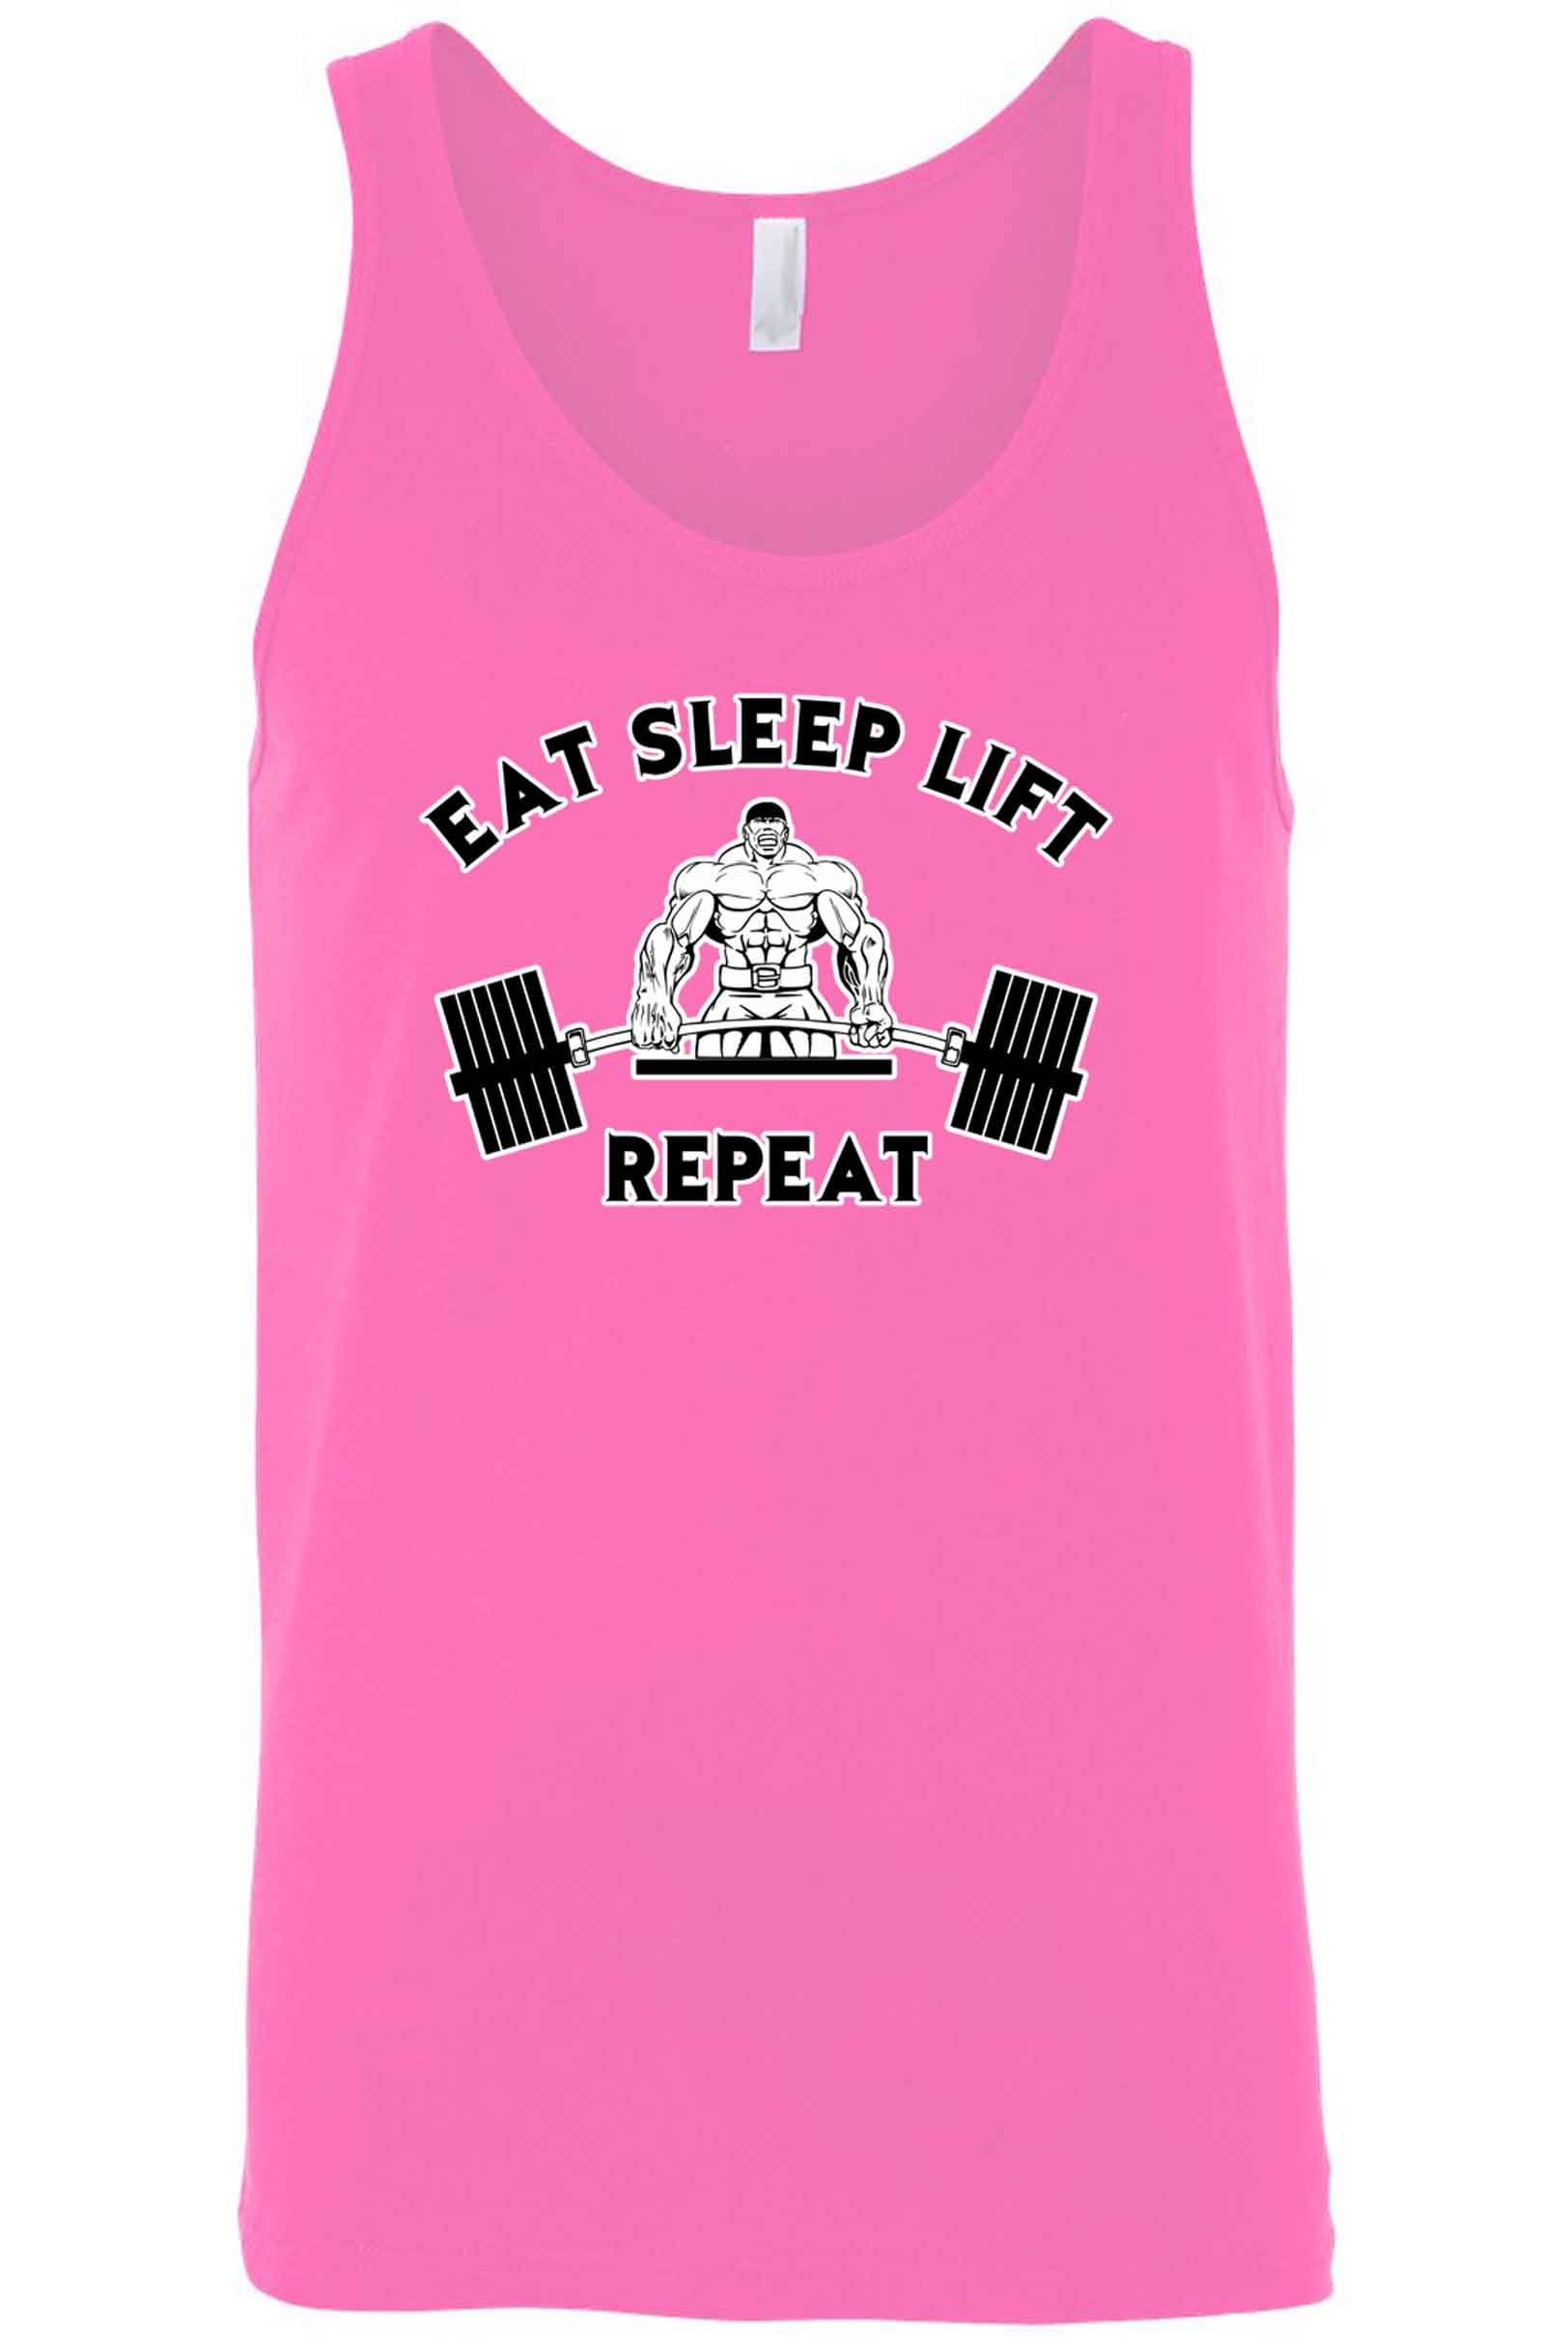 Mens Eat Sleep Lift Repeat Tank Top Shirt 